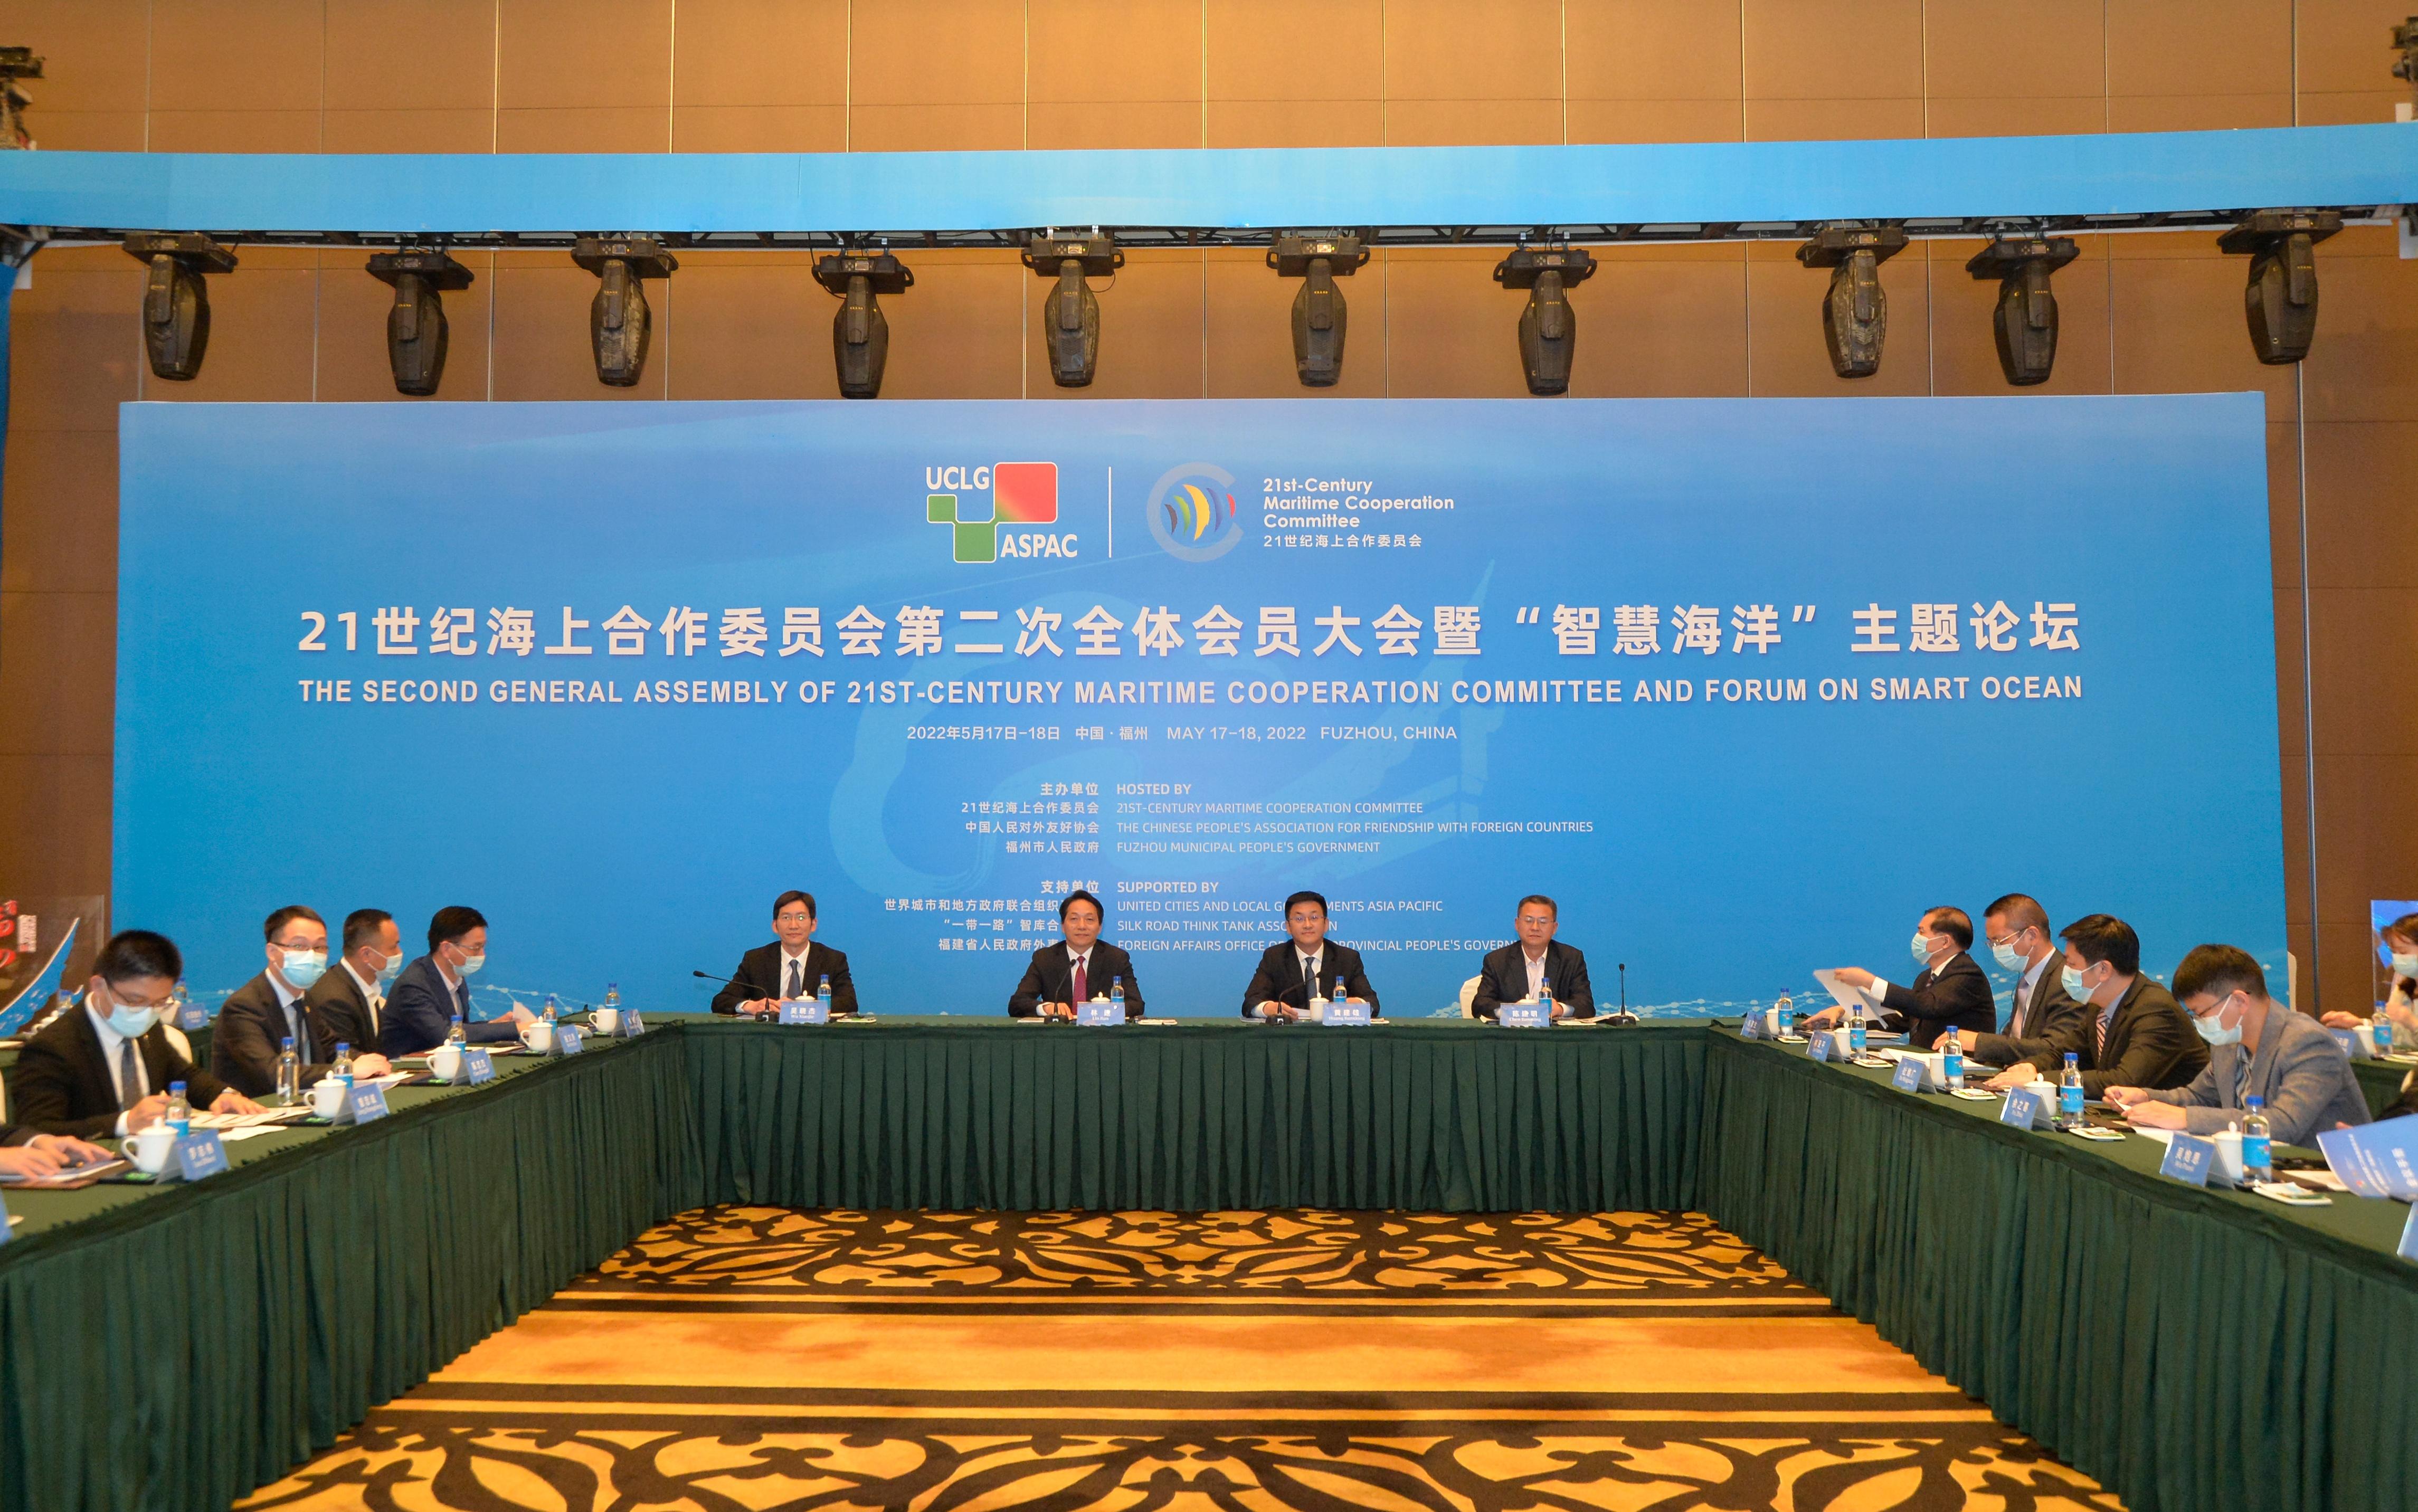 Forum on Smart Ocean of 21st-Century Maritime Cooperation Committee Convened